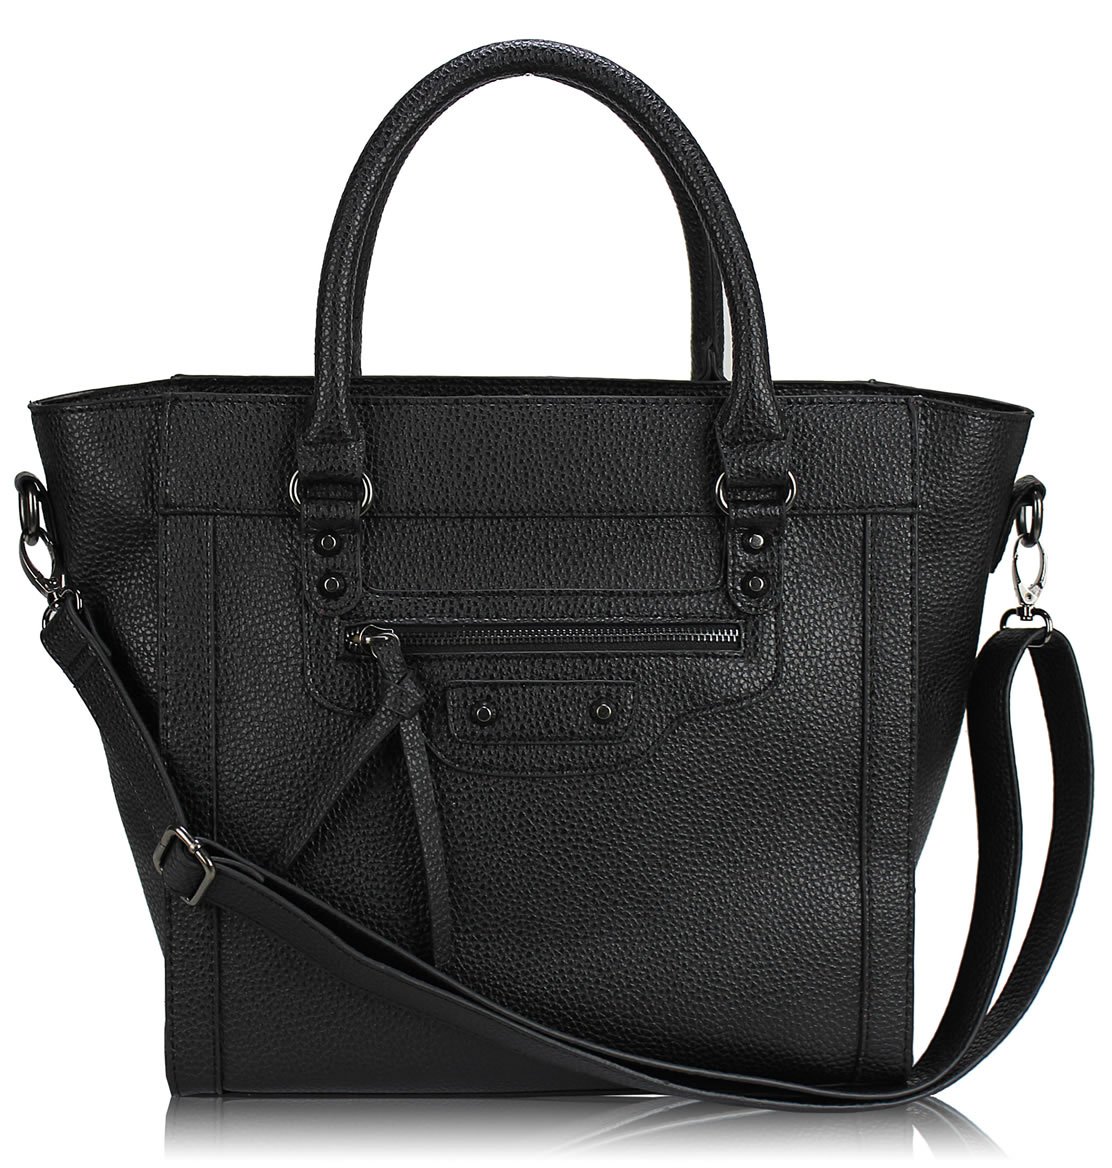 Wholesale Black Tote Handbag With Long Strap